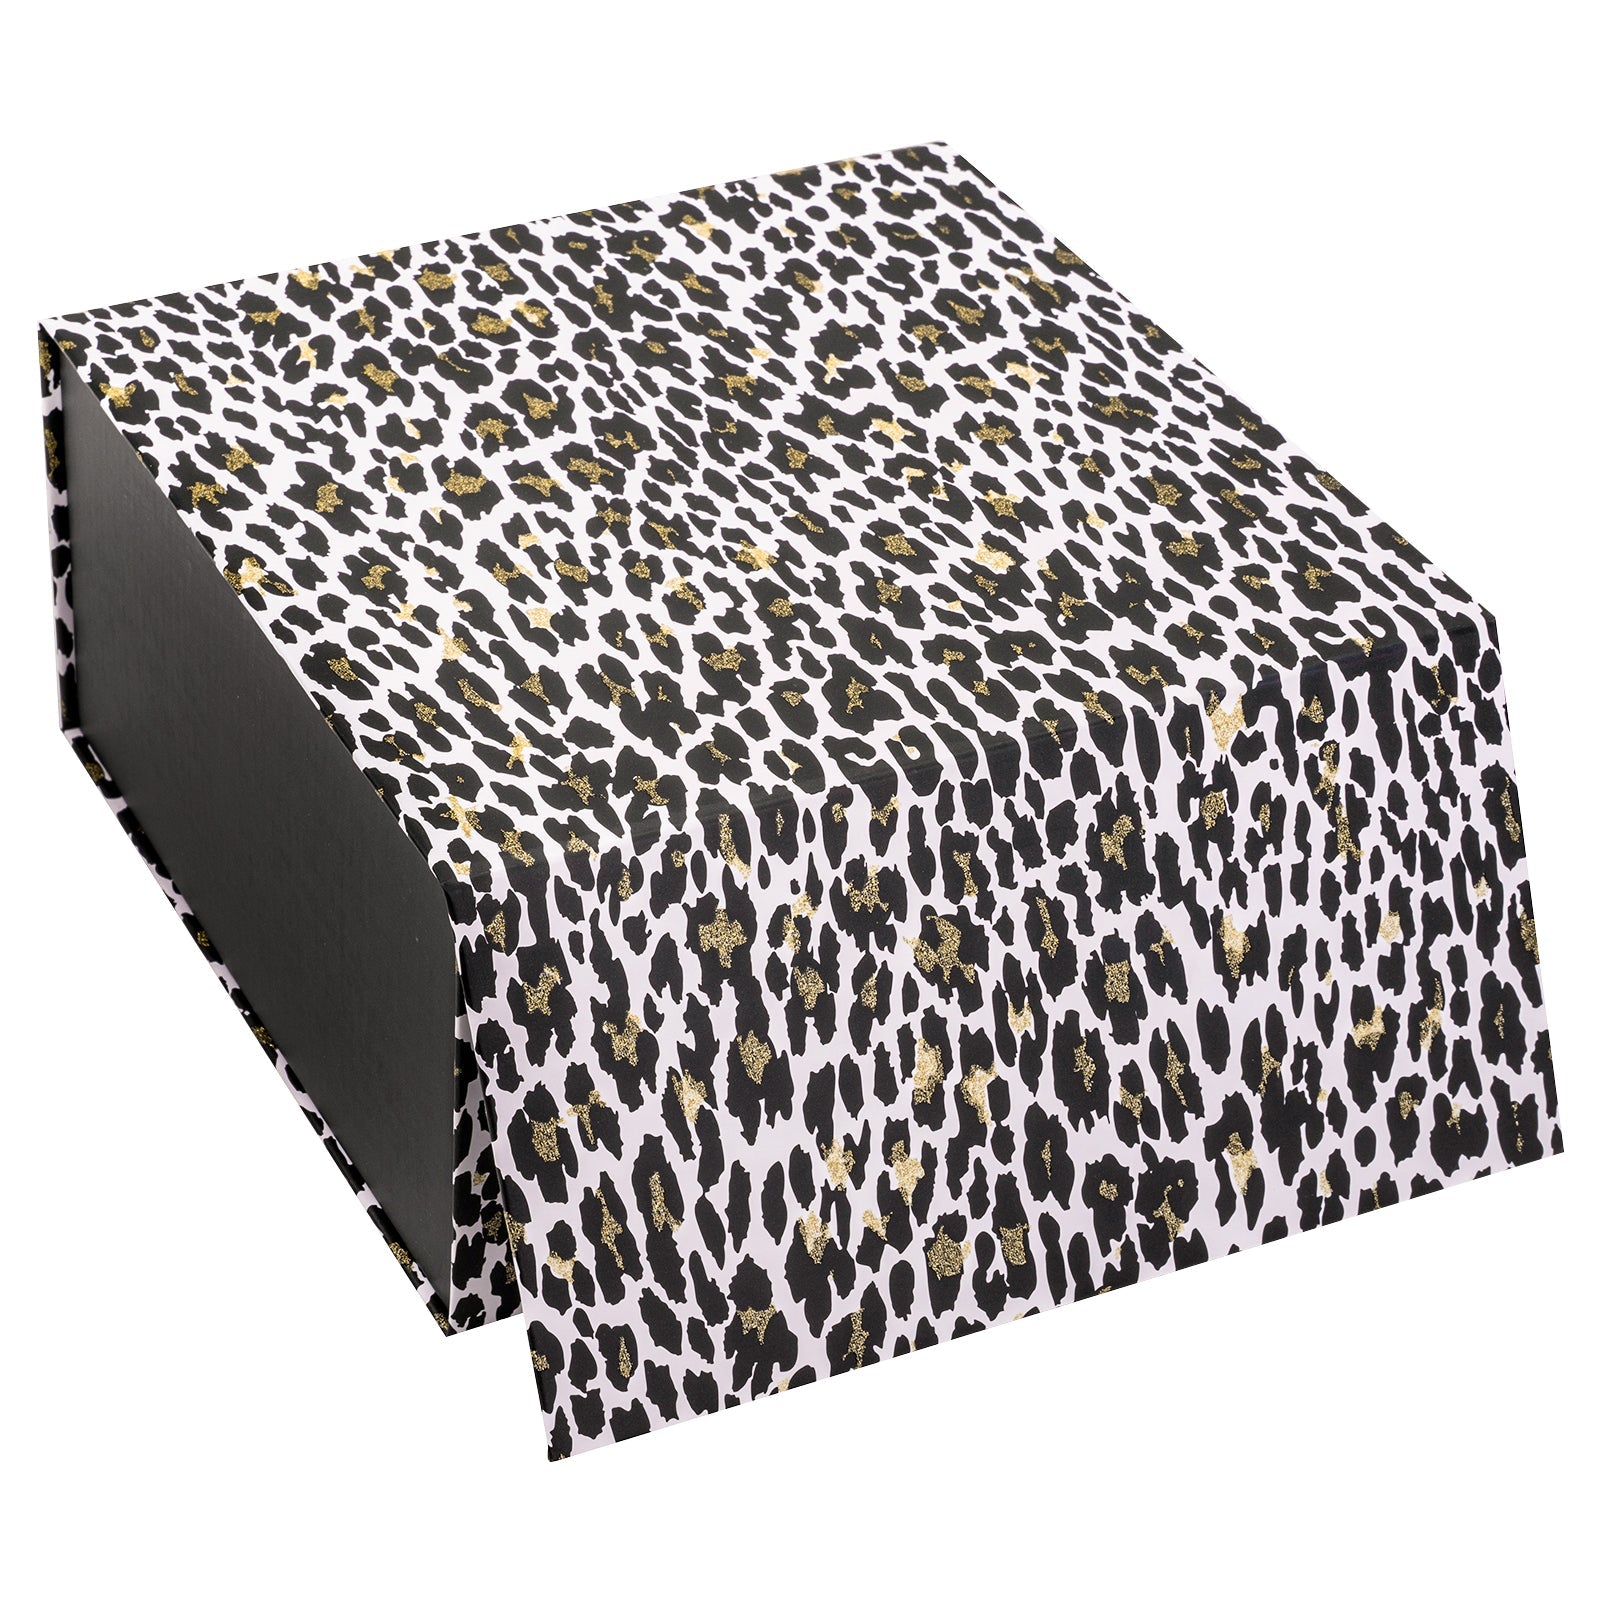 8x8x4 inch Magnetic Closure Box Glitter Leopard